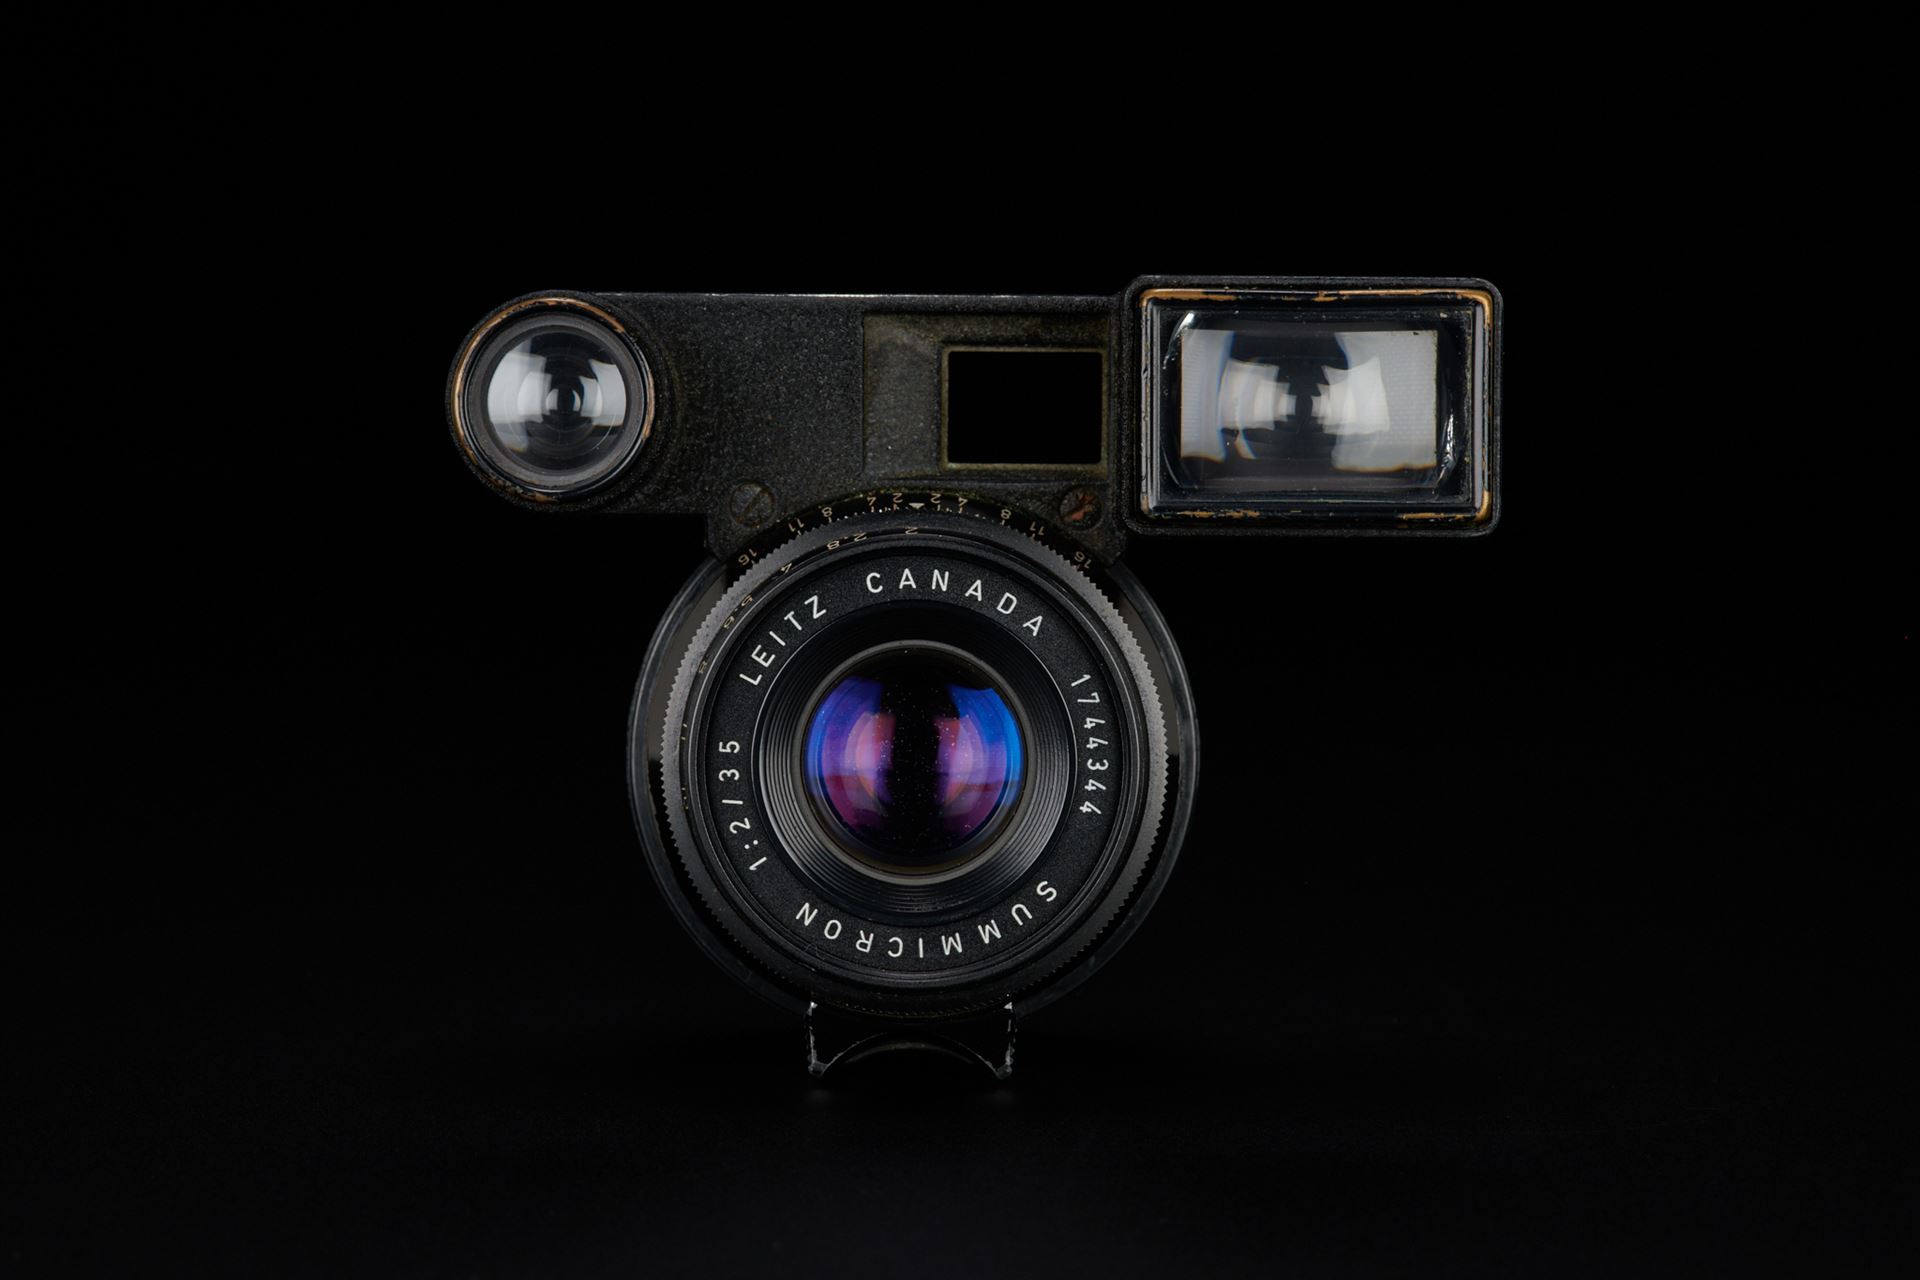 Picture of Leica M3 Original Black Paint with 2-lens Set